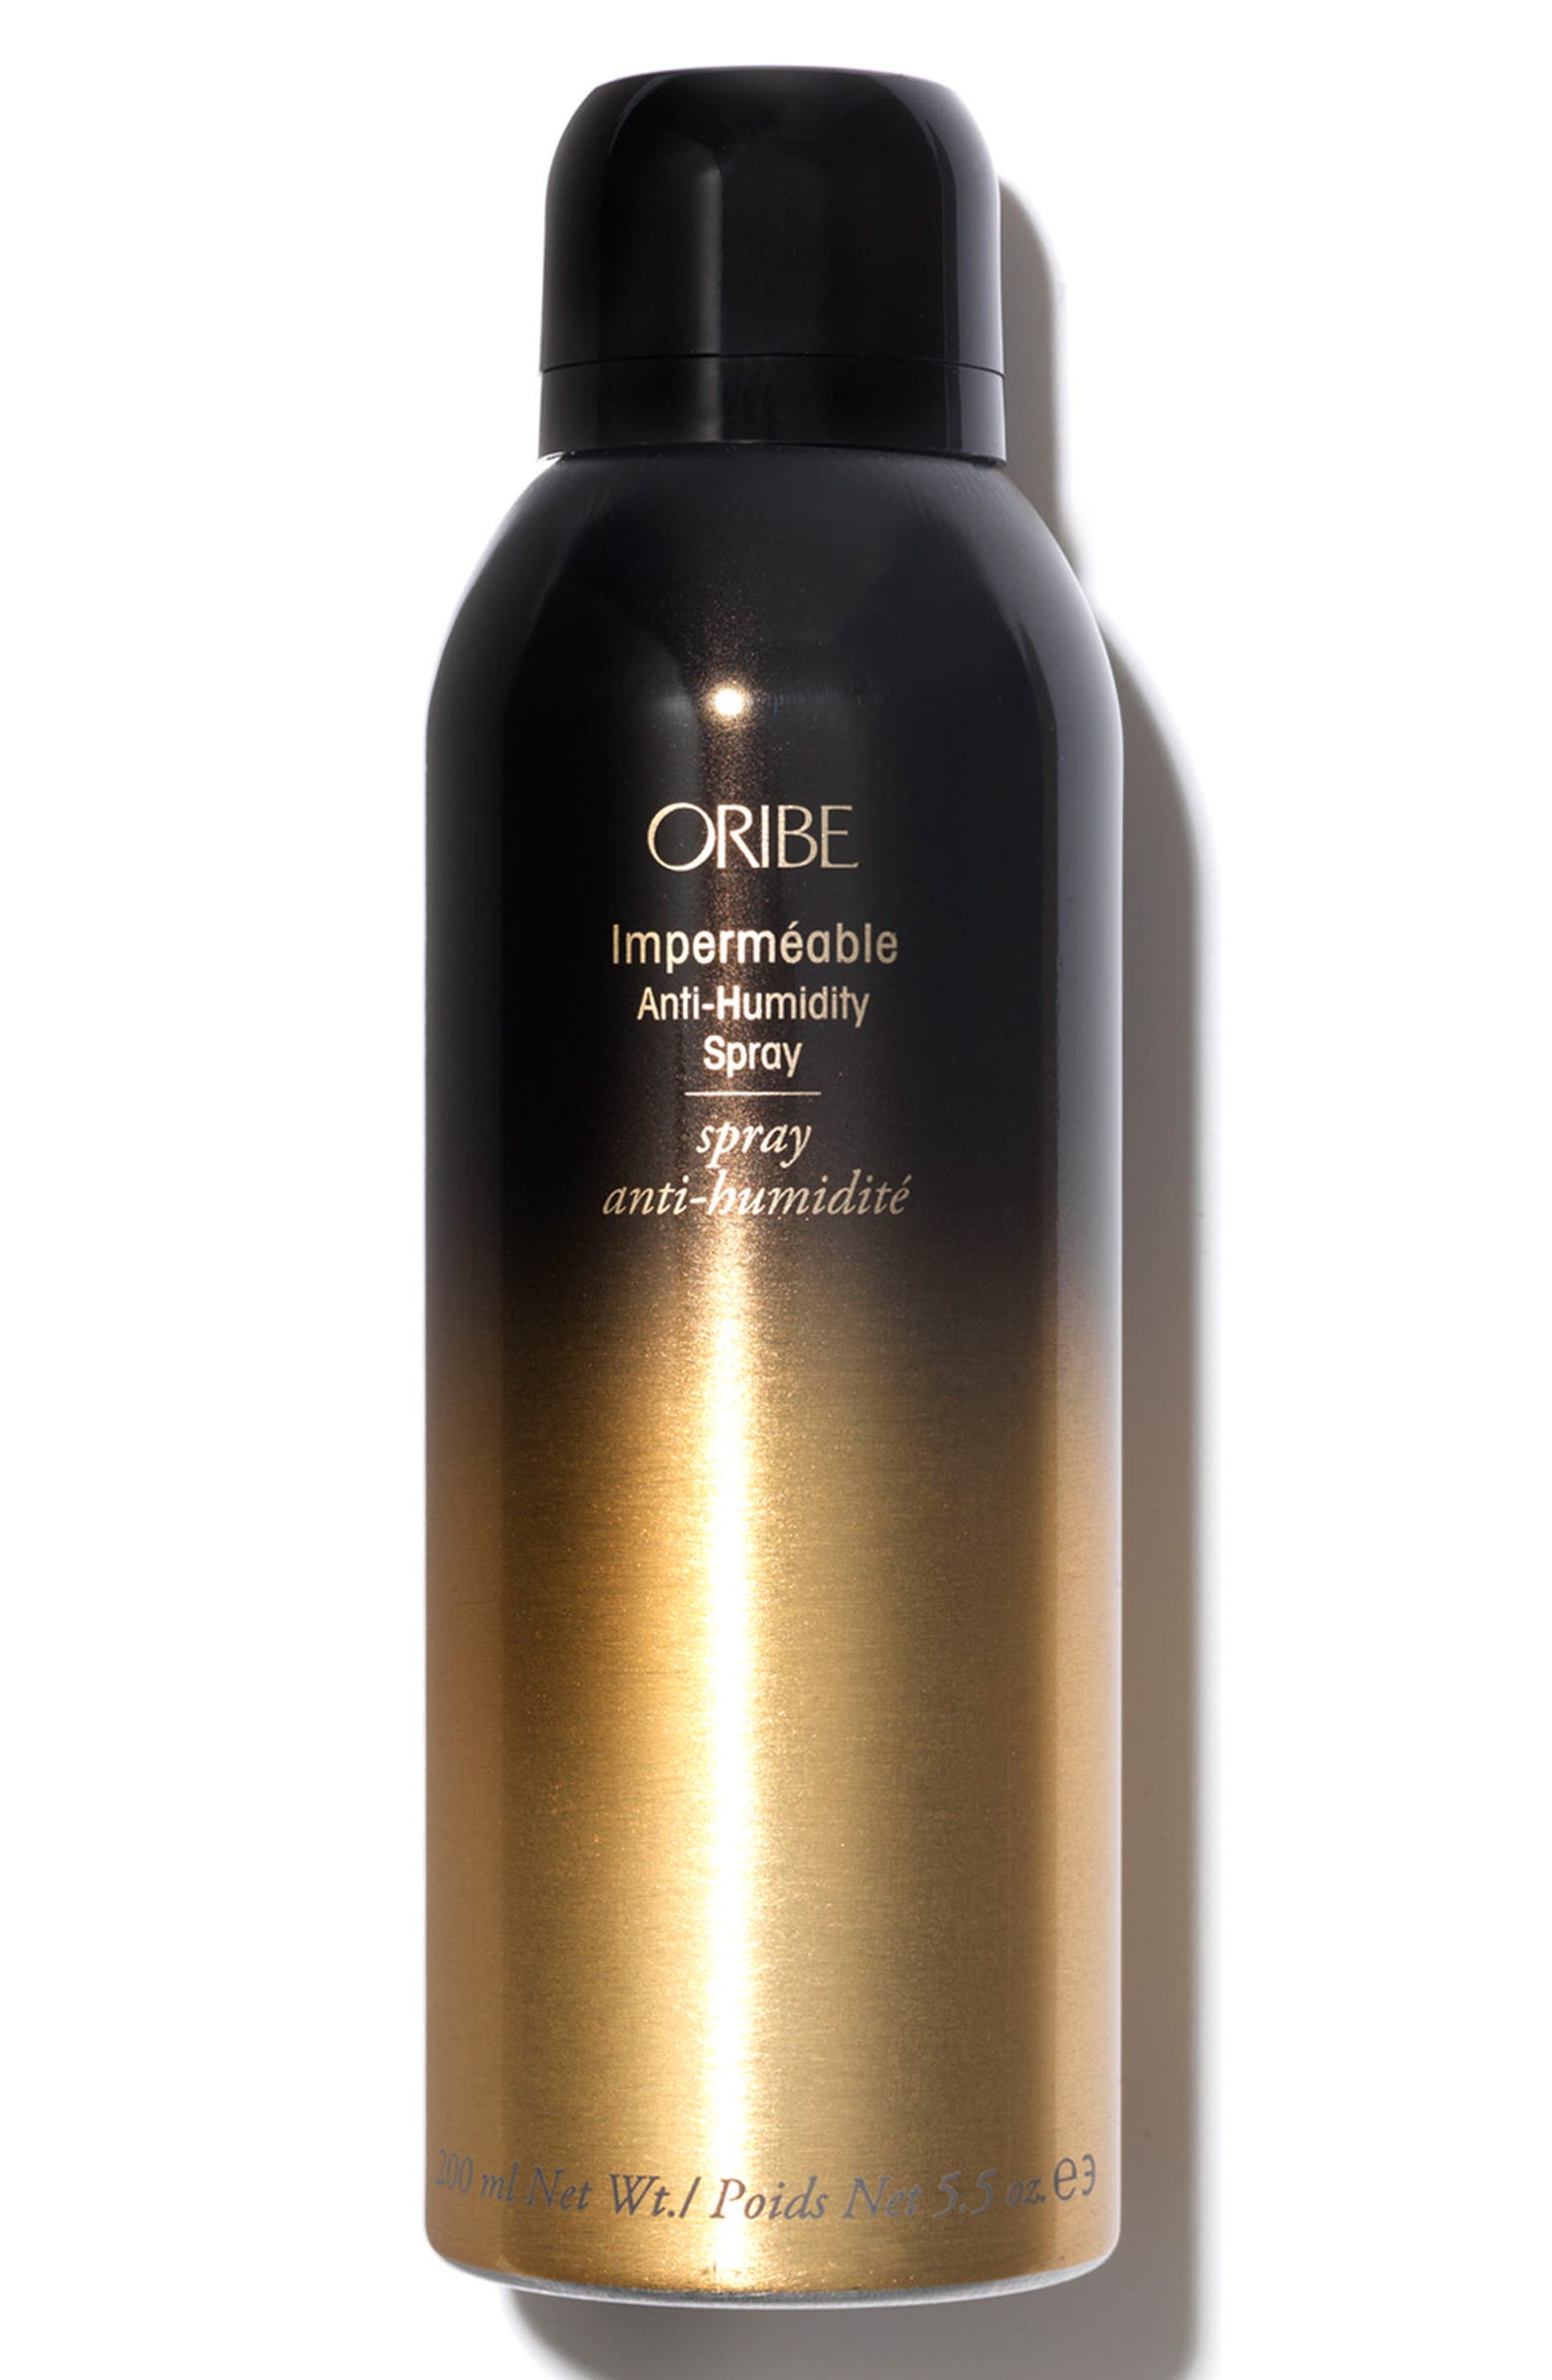 Oribe hair spray